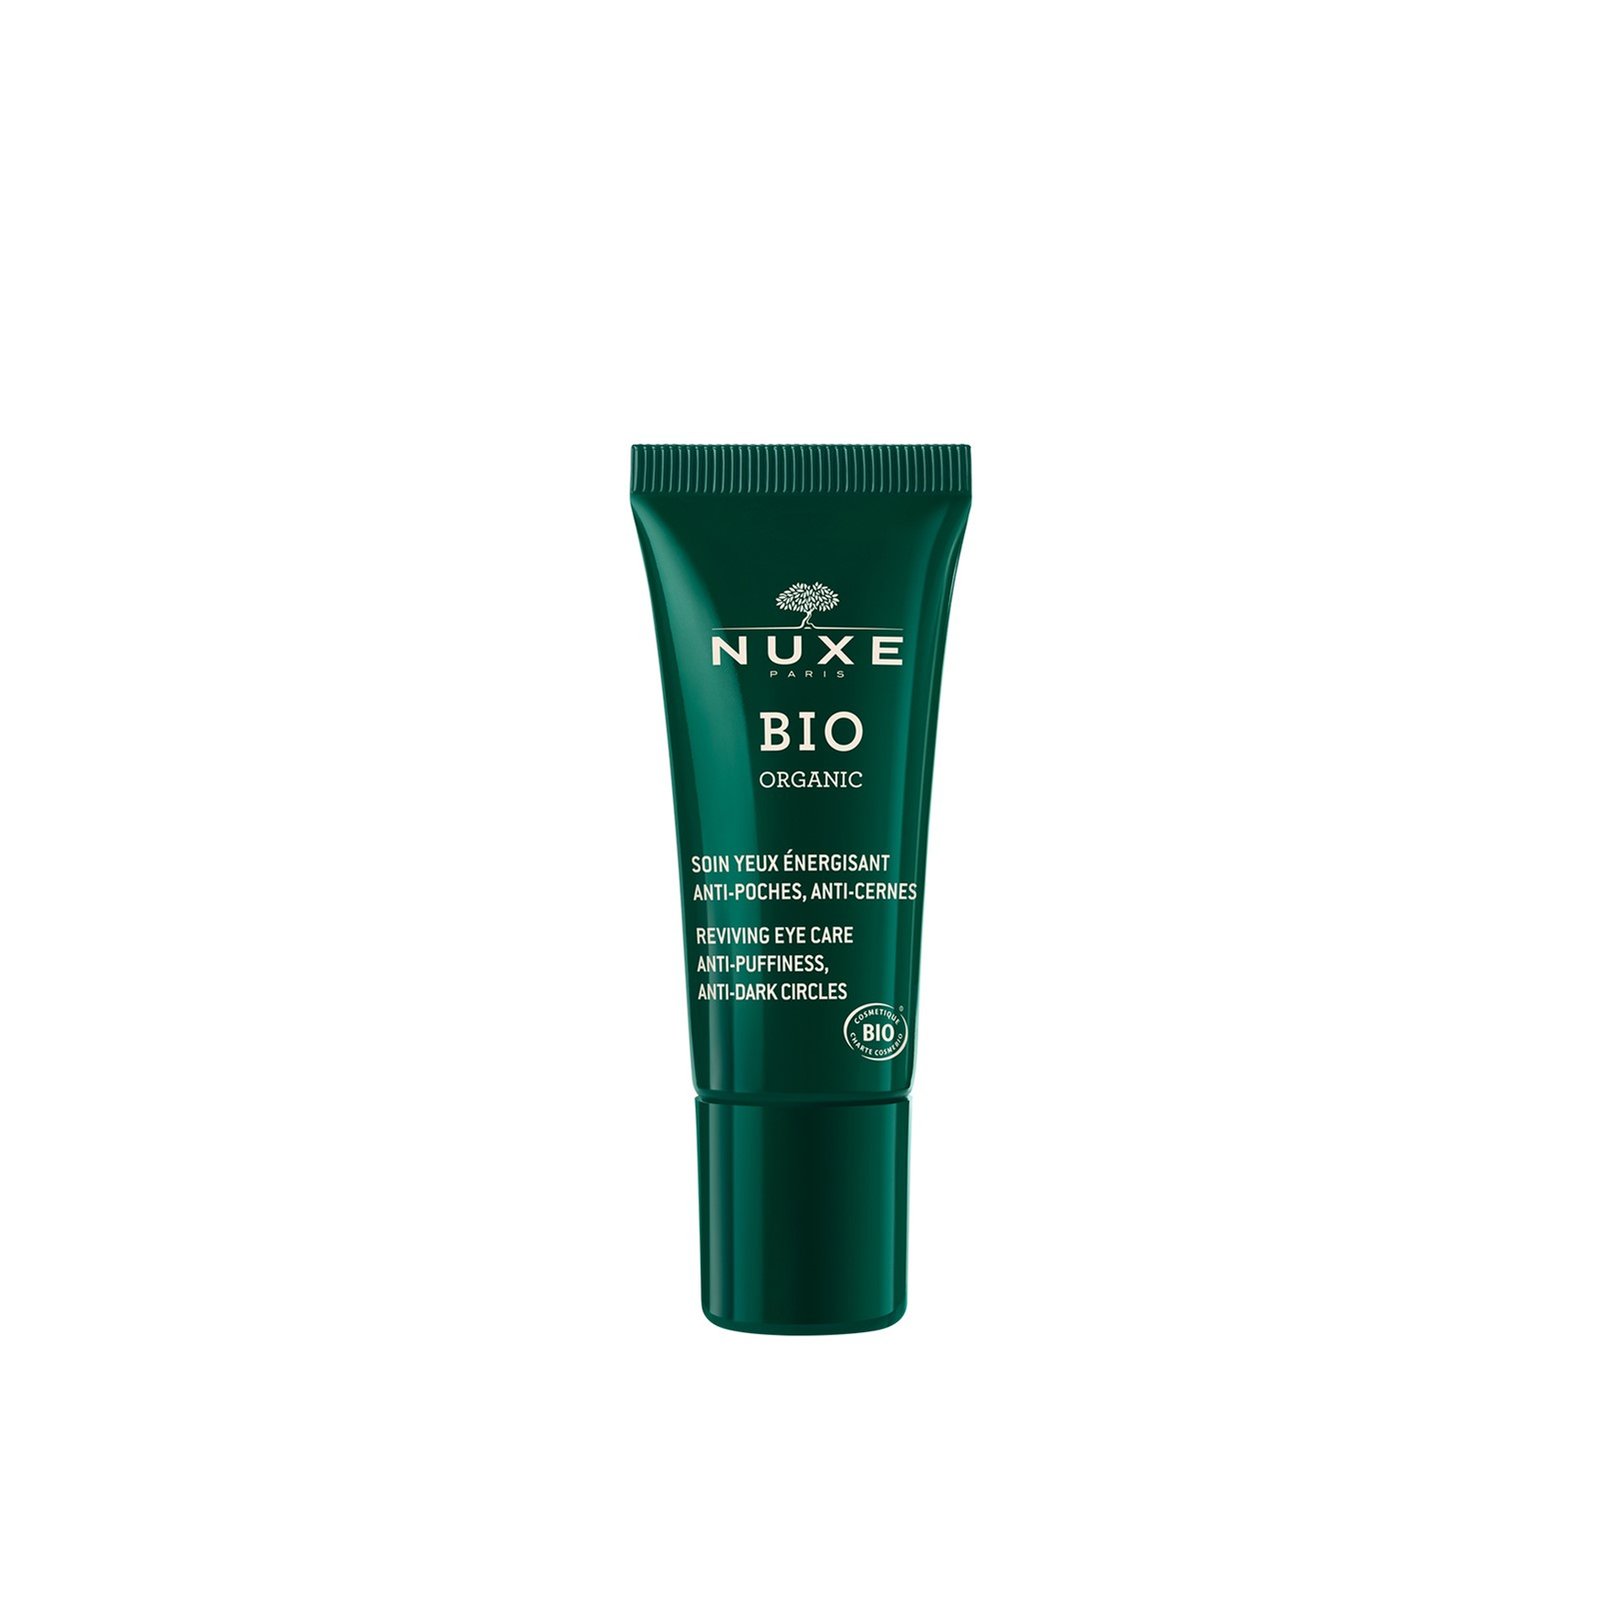 NUXE BIO Organic Buckwheat Anti-Puffiness Reviving Eye Care 15ml (0.51fl oz)